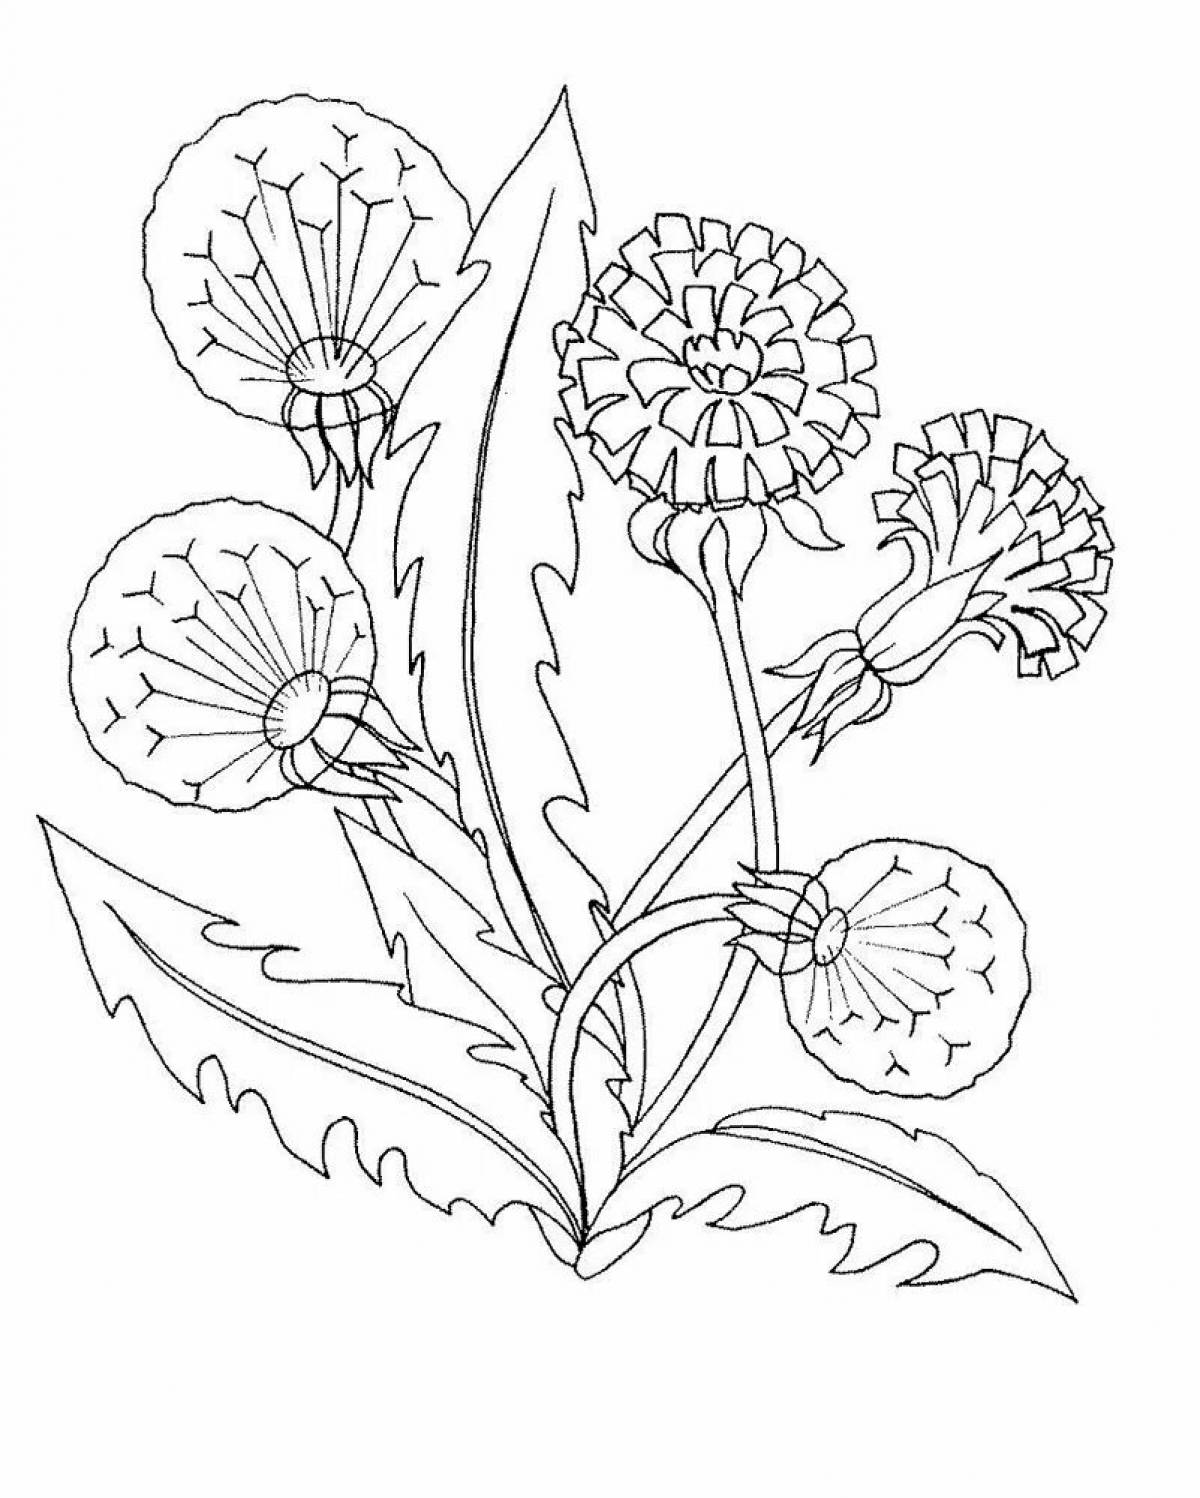 Adorable medicinal plants coloring book for preschoolers